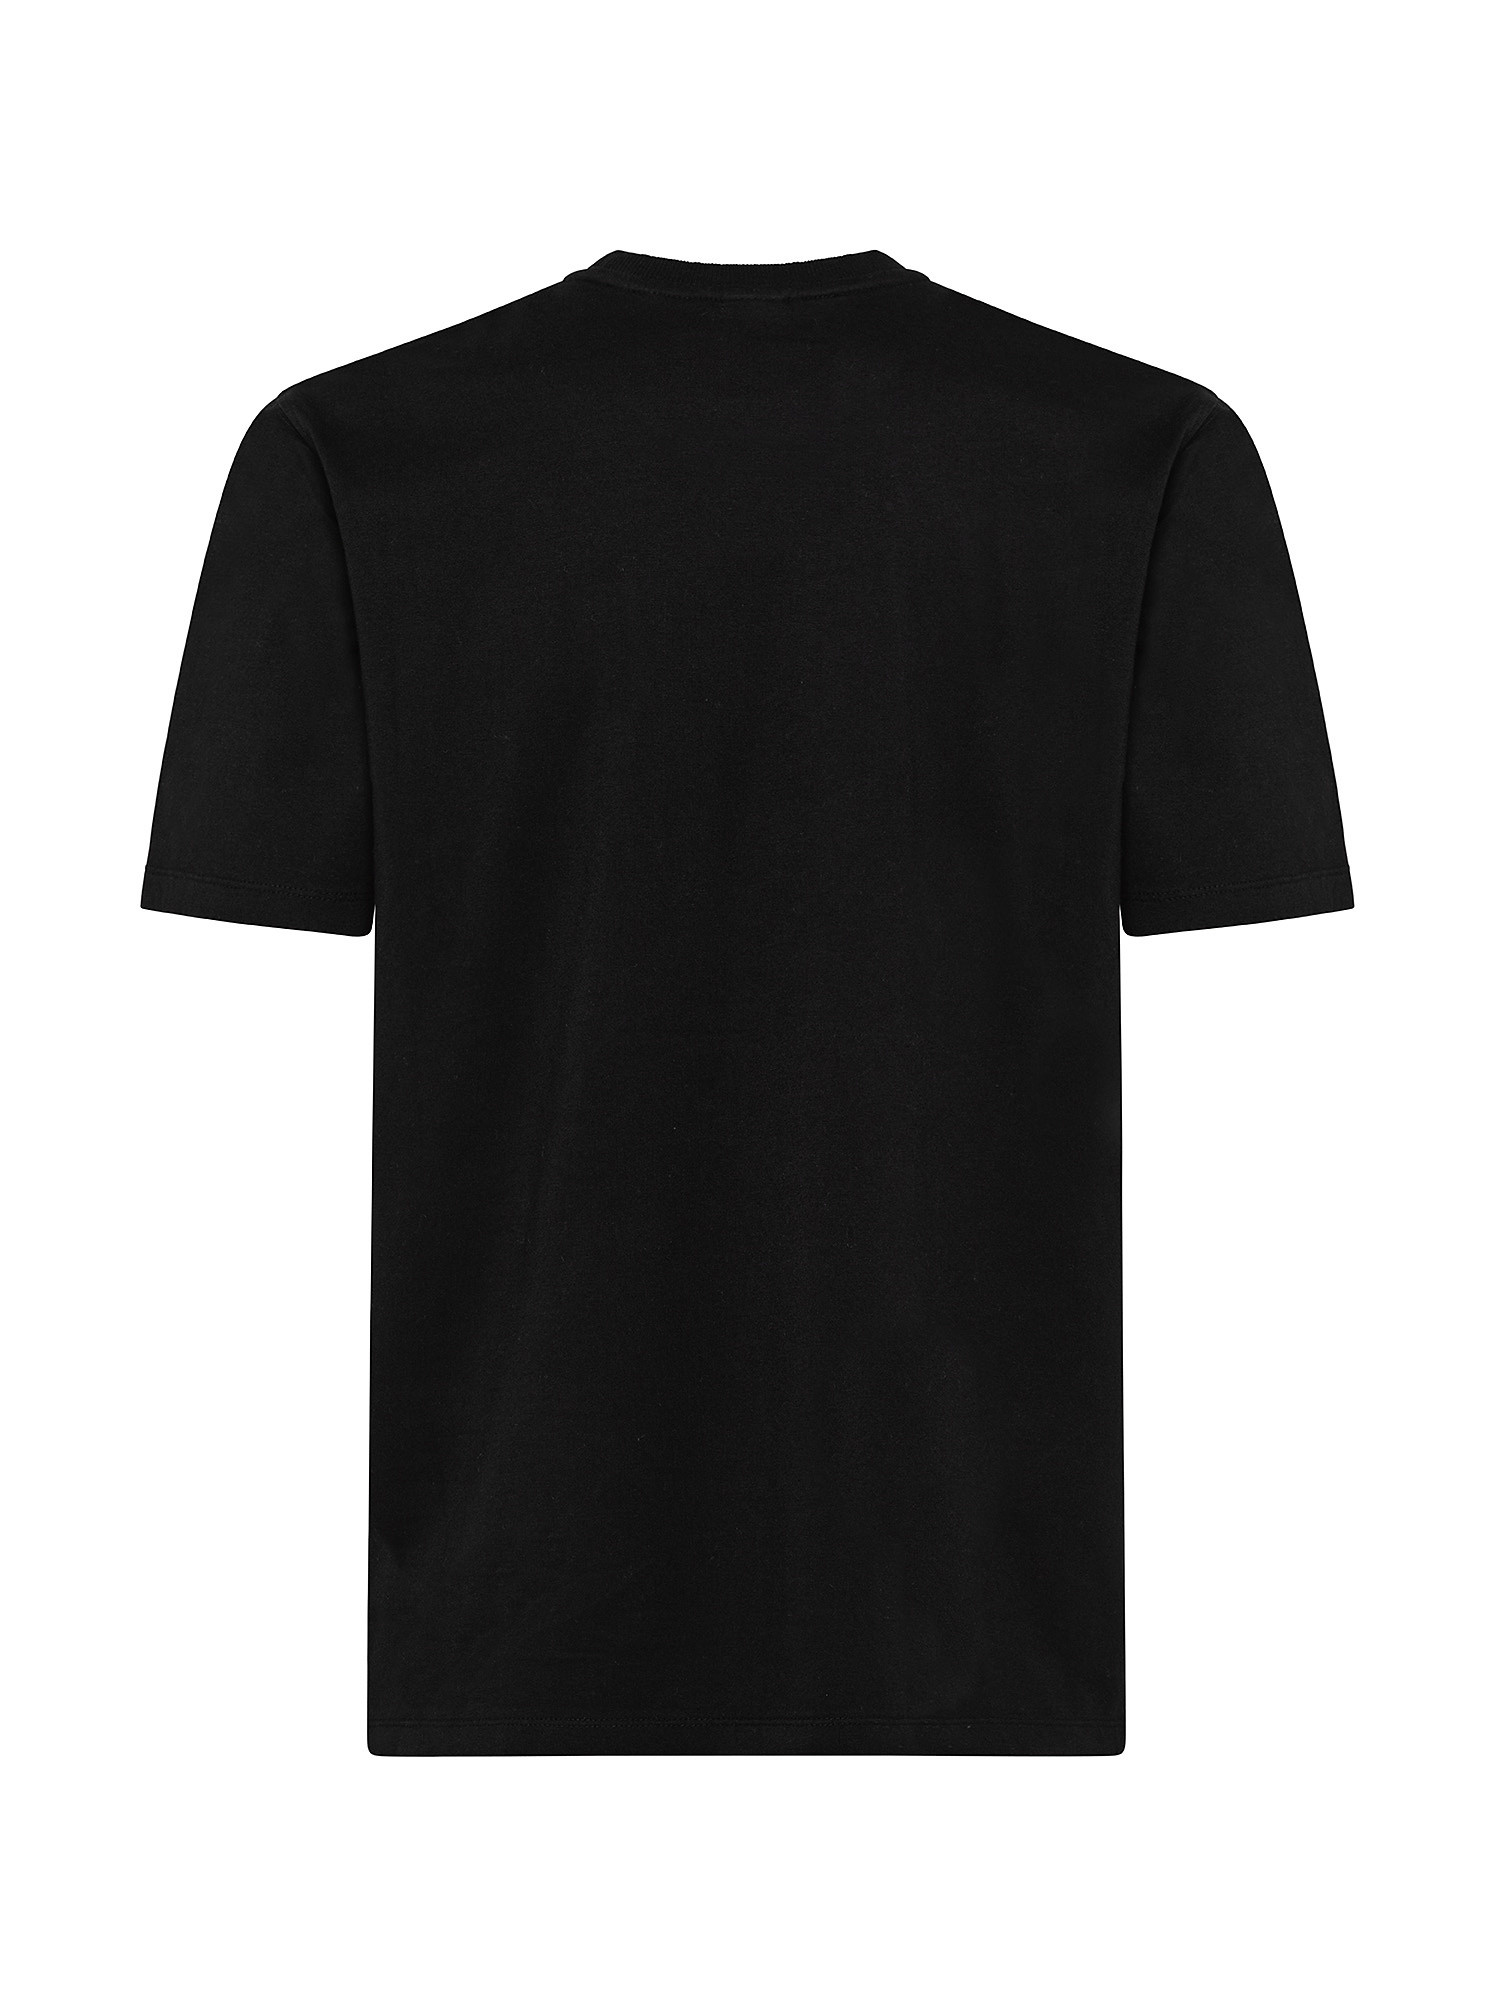 Hank Baseball T-Shirt, Black, large image number 1